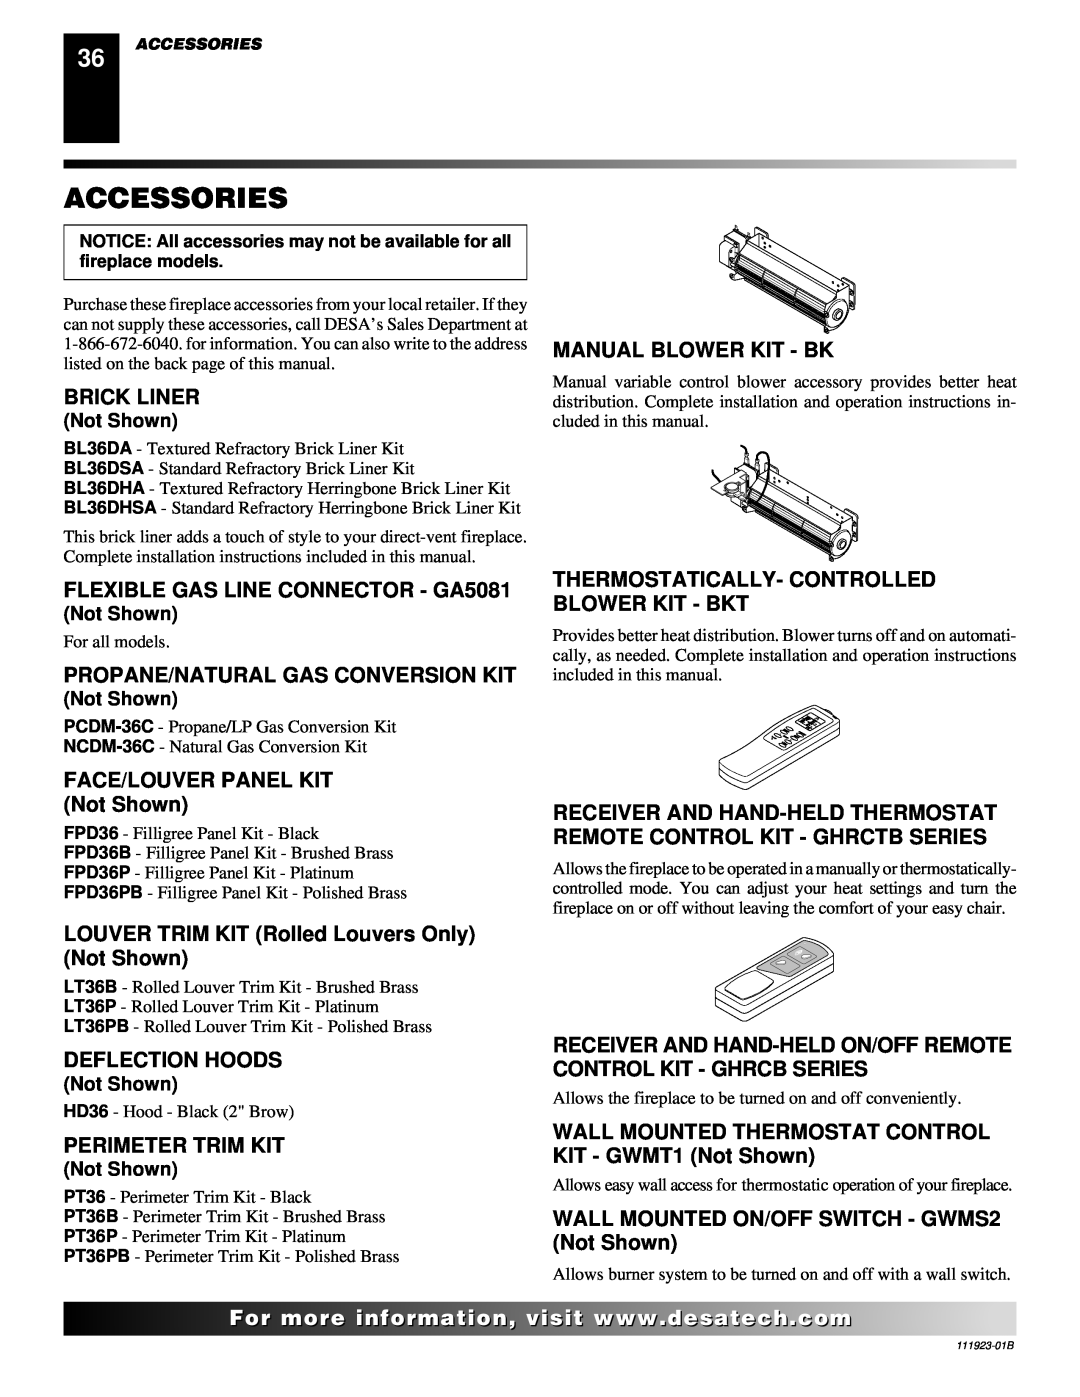 Desa (V)K36N SERIES Accessories, Brick Liner, FLEXIBLE GAS LINE CONNECTOR - GA5081, Propane/Natural Gas Conversion Kit 